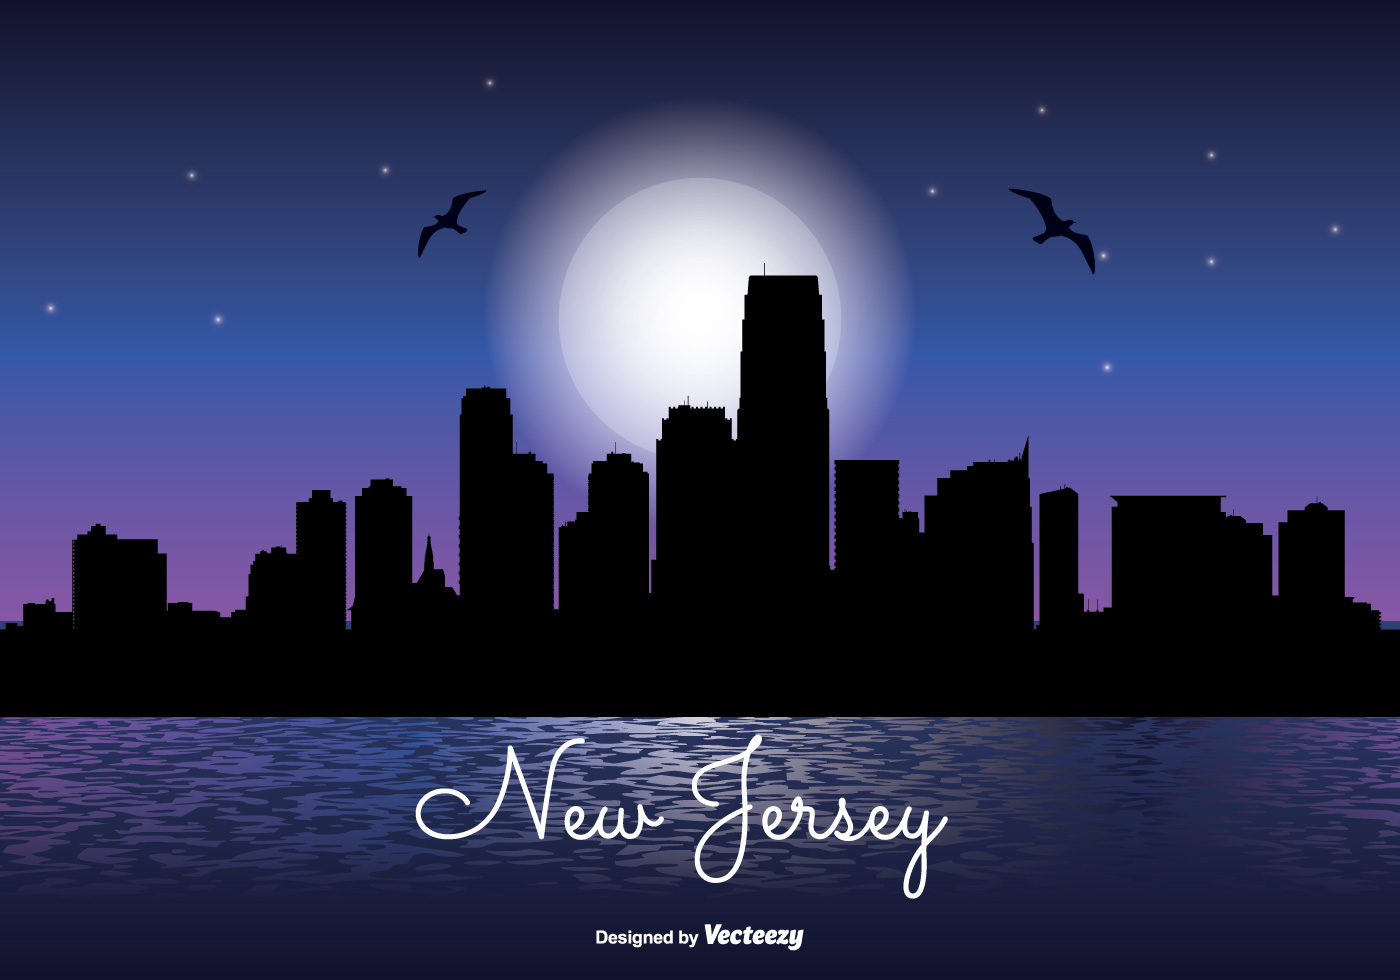 Download New Jersey Night Skyline Illustration - Download Free ...